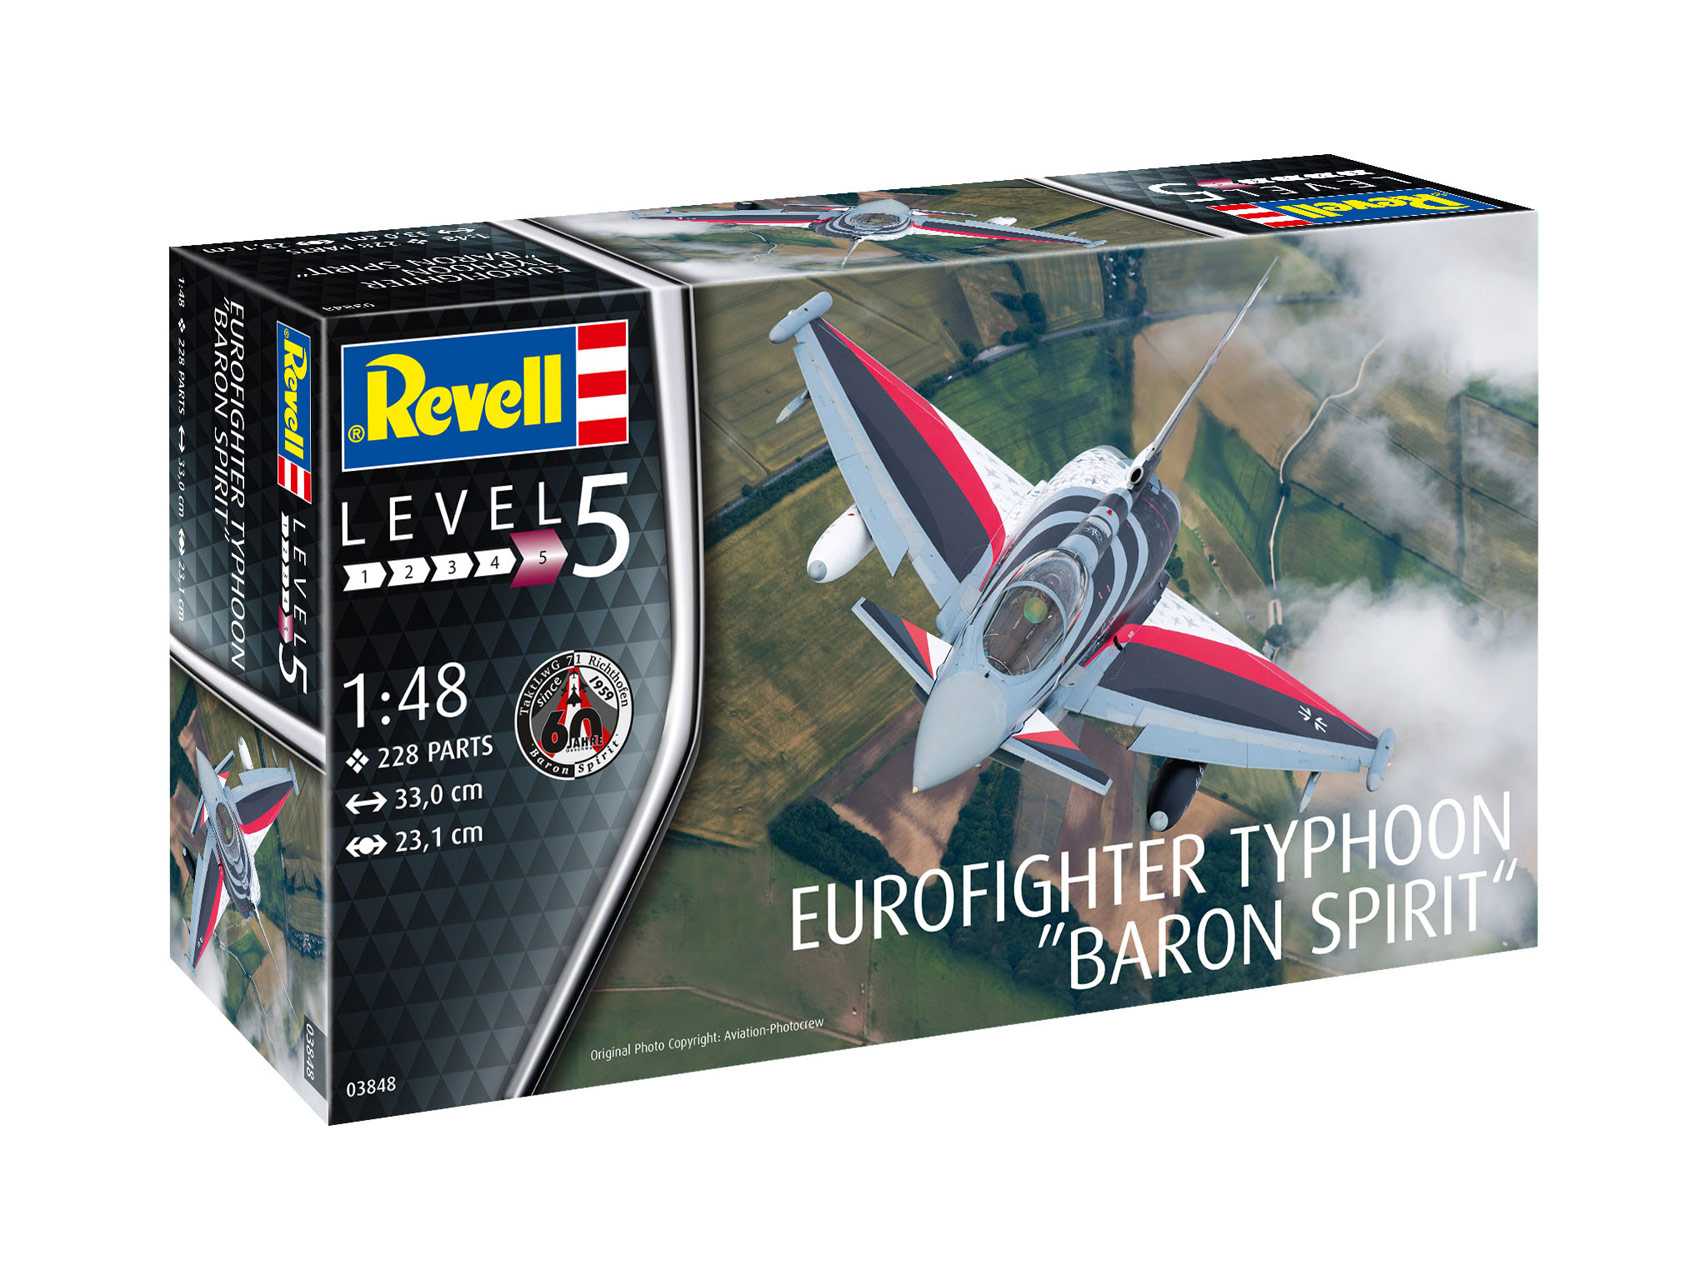 Fotografie Plastic ModelKit letadlo 03848 - Eurofighter Typhoon "BARON SPIRIT" (1:48)